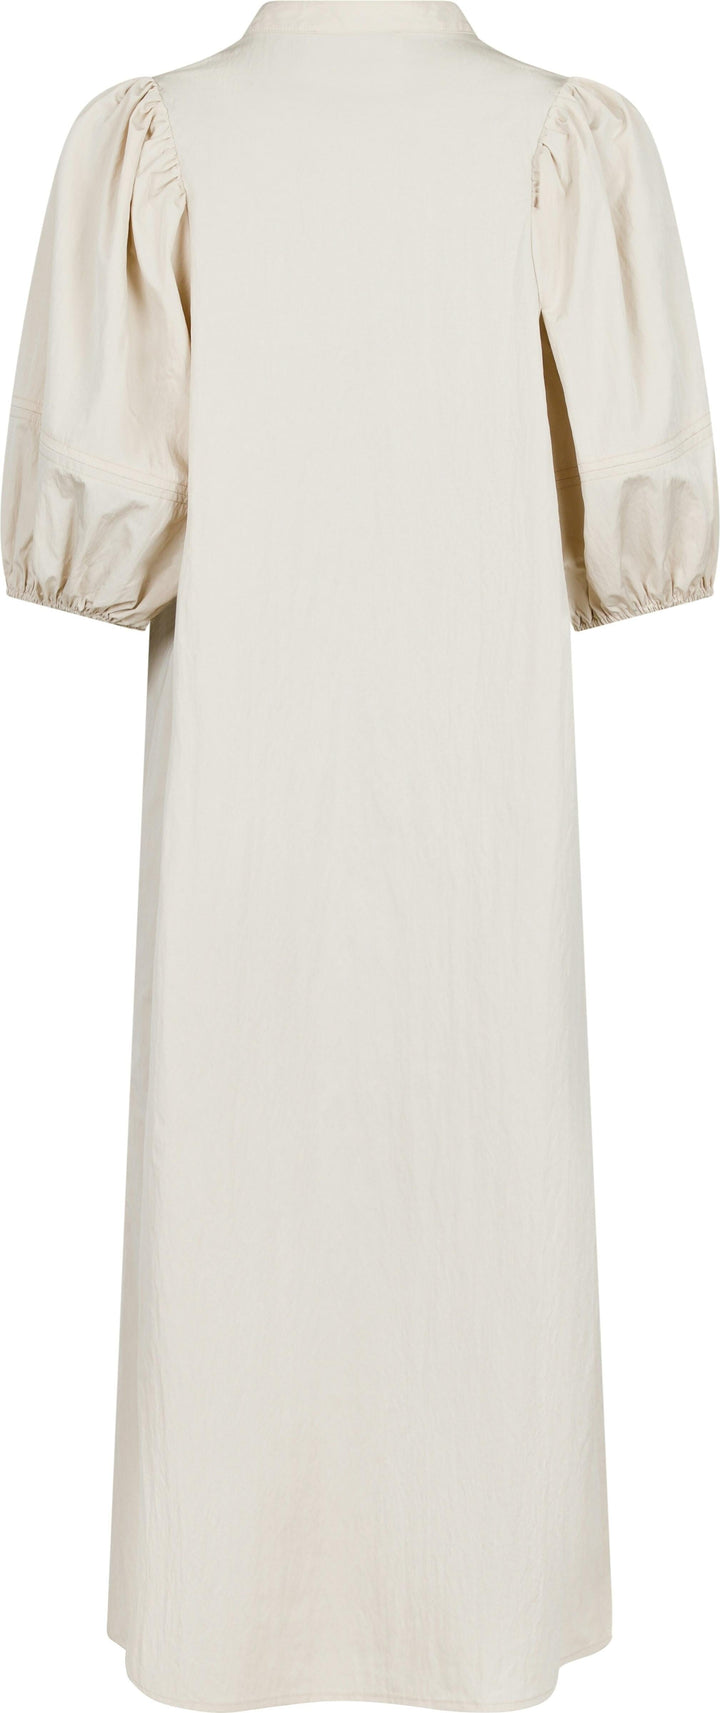 Neo Noir - Verossa Solid Dress - Ivory